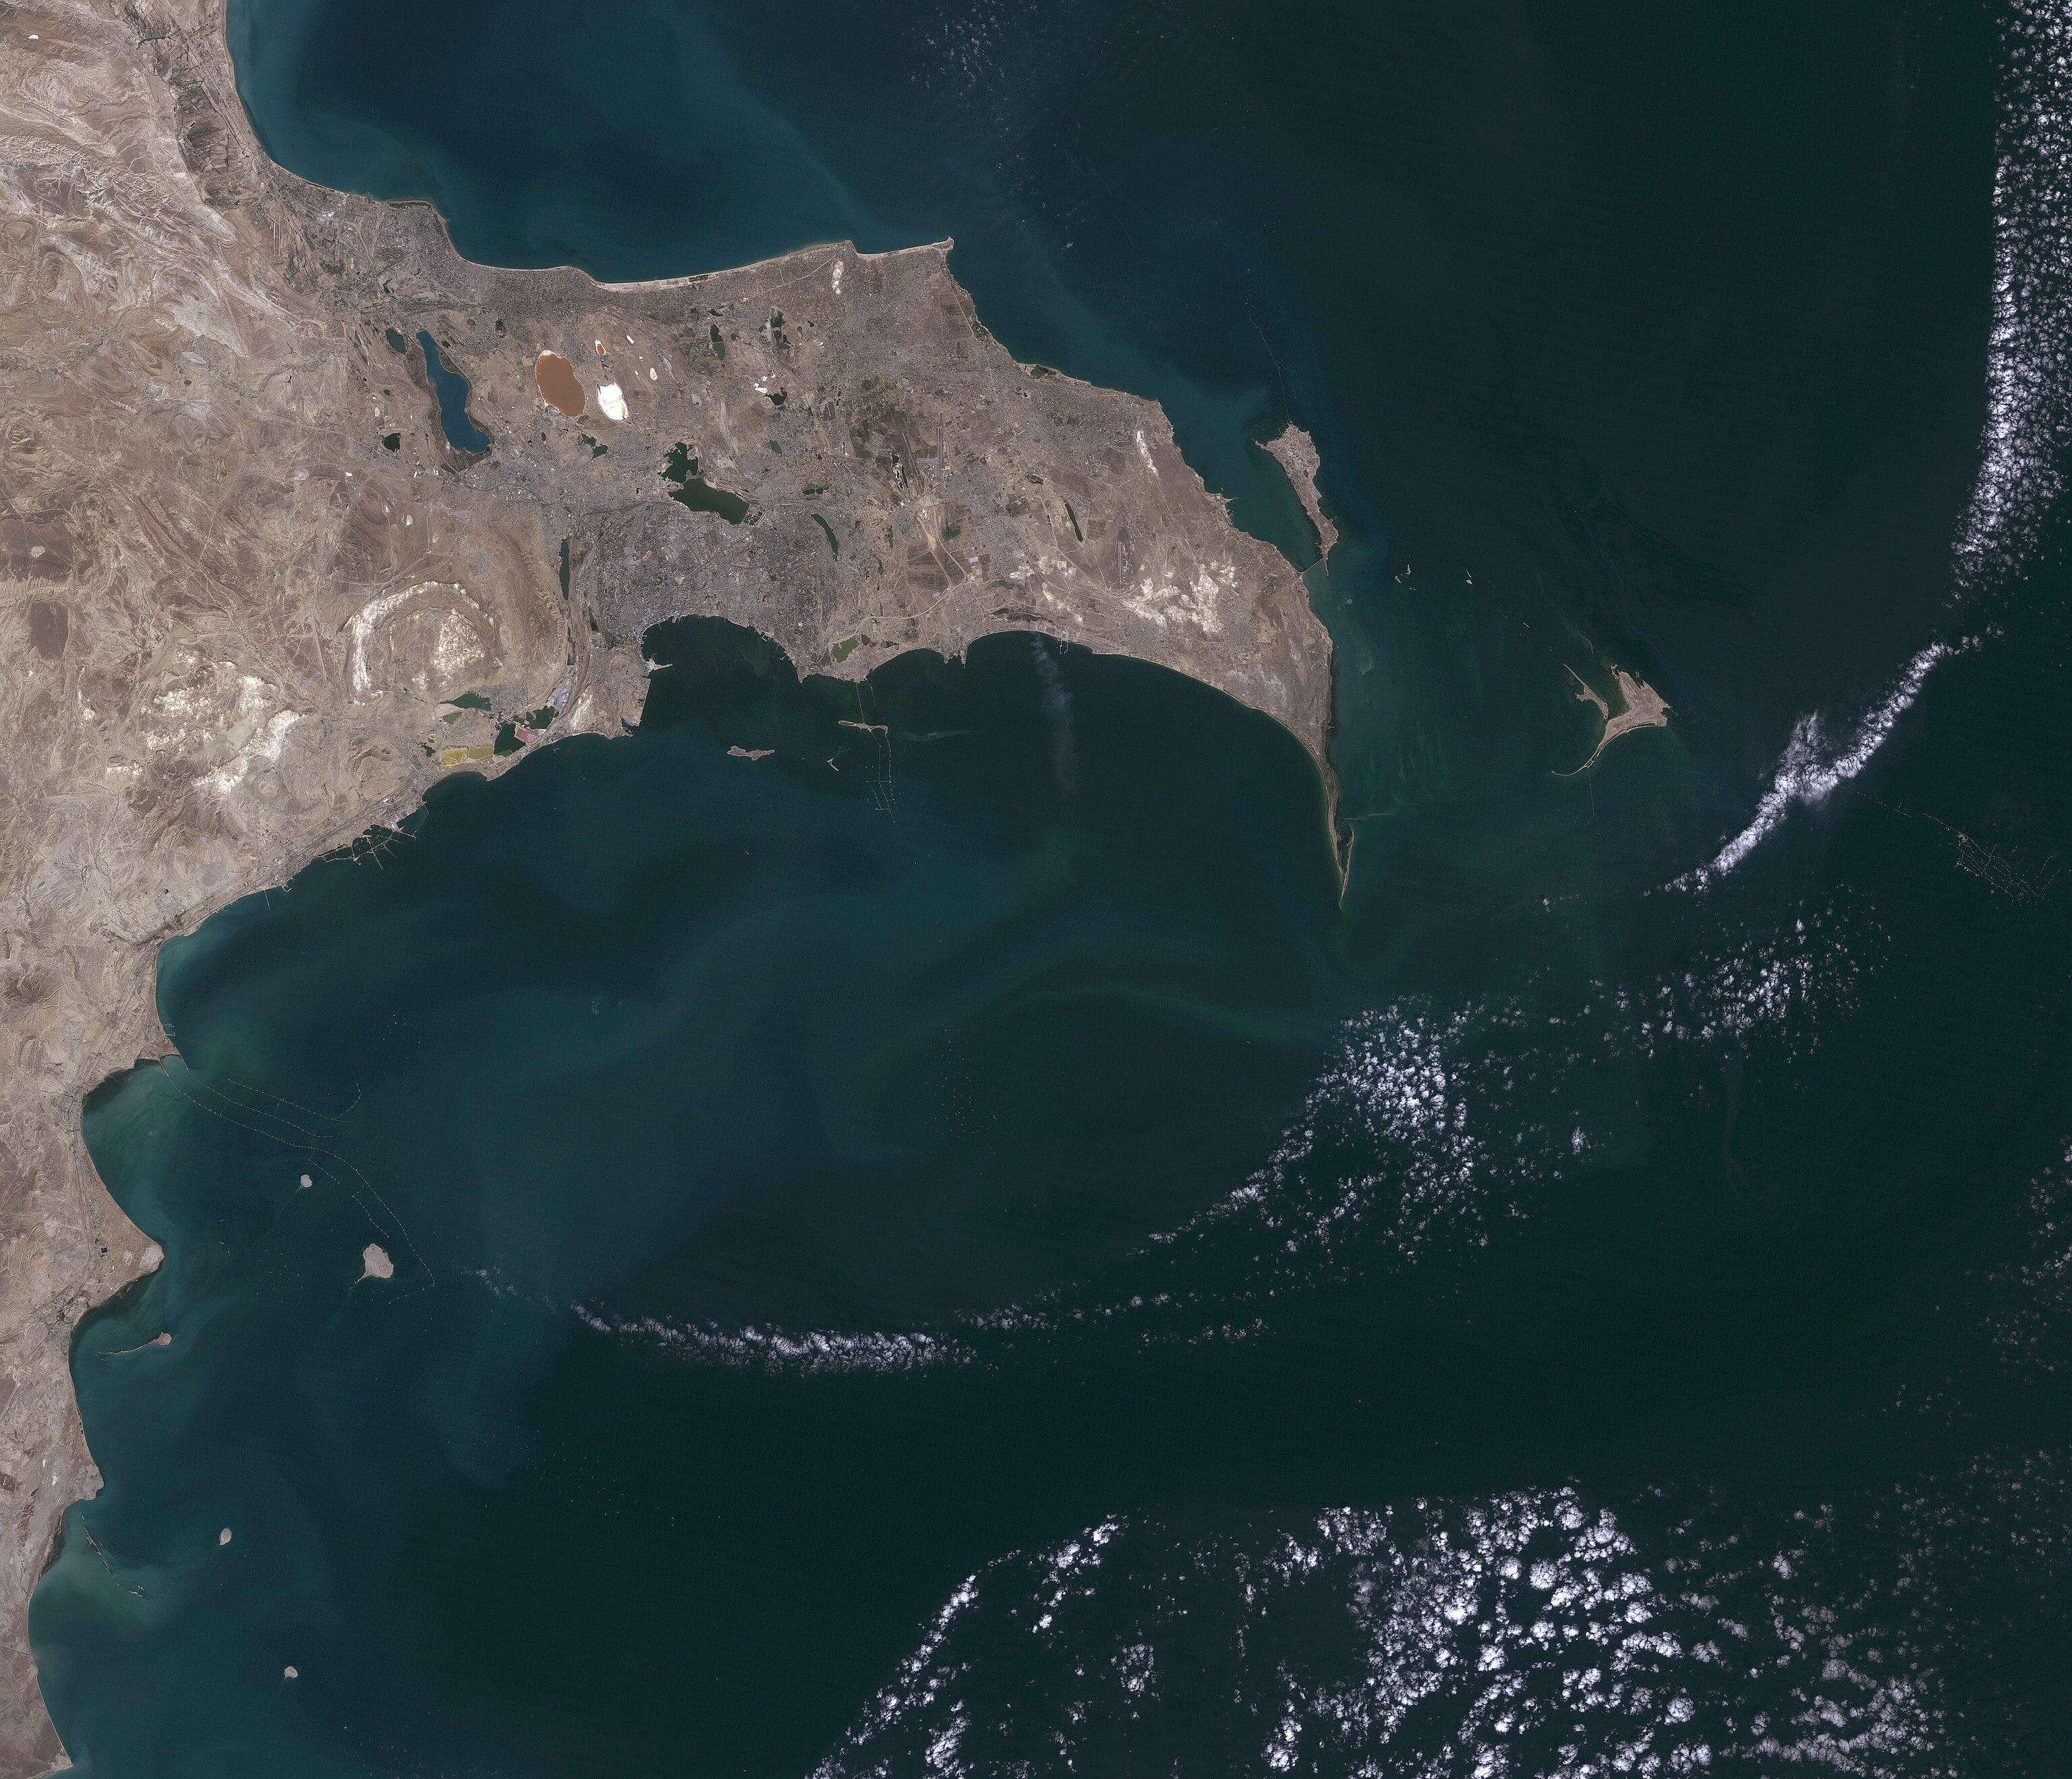 Baku - Greater Baku, Azerbaijan, satellite image, LandSat-5, 2010-09-06, near natural colors, resolution 30 m